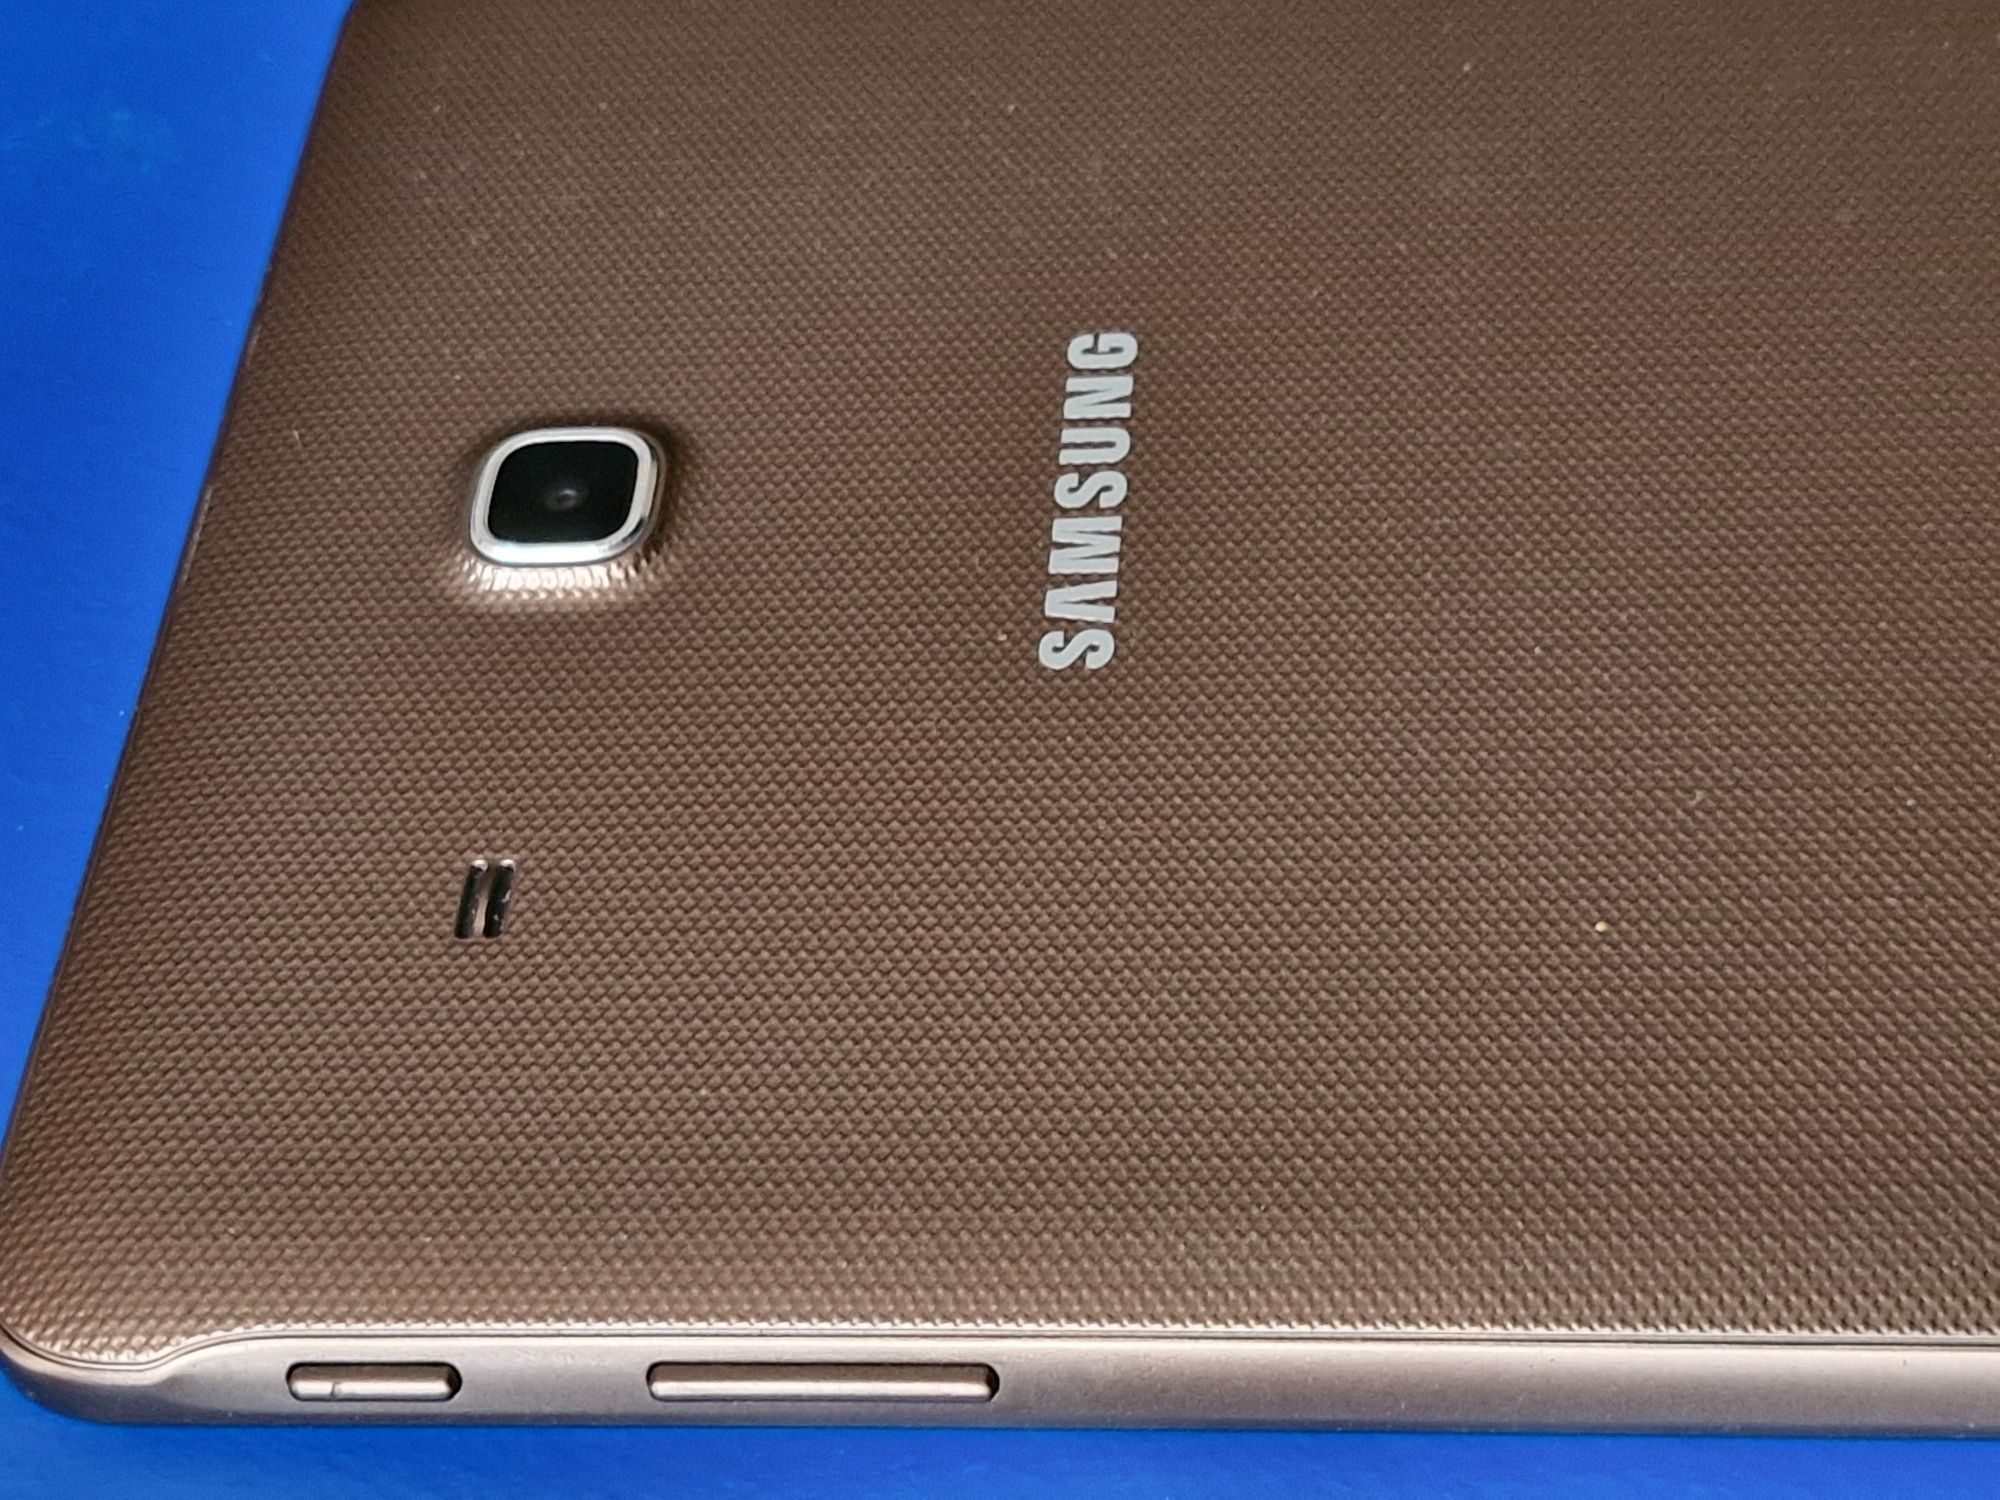 Продается планшет Samsung Galaxy Tab E!

Характеристики:

ОС: Android